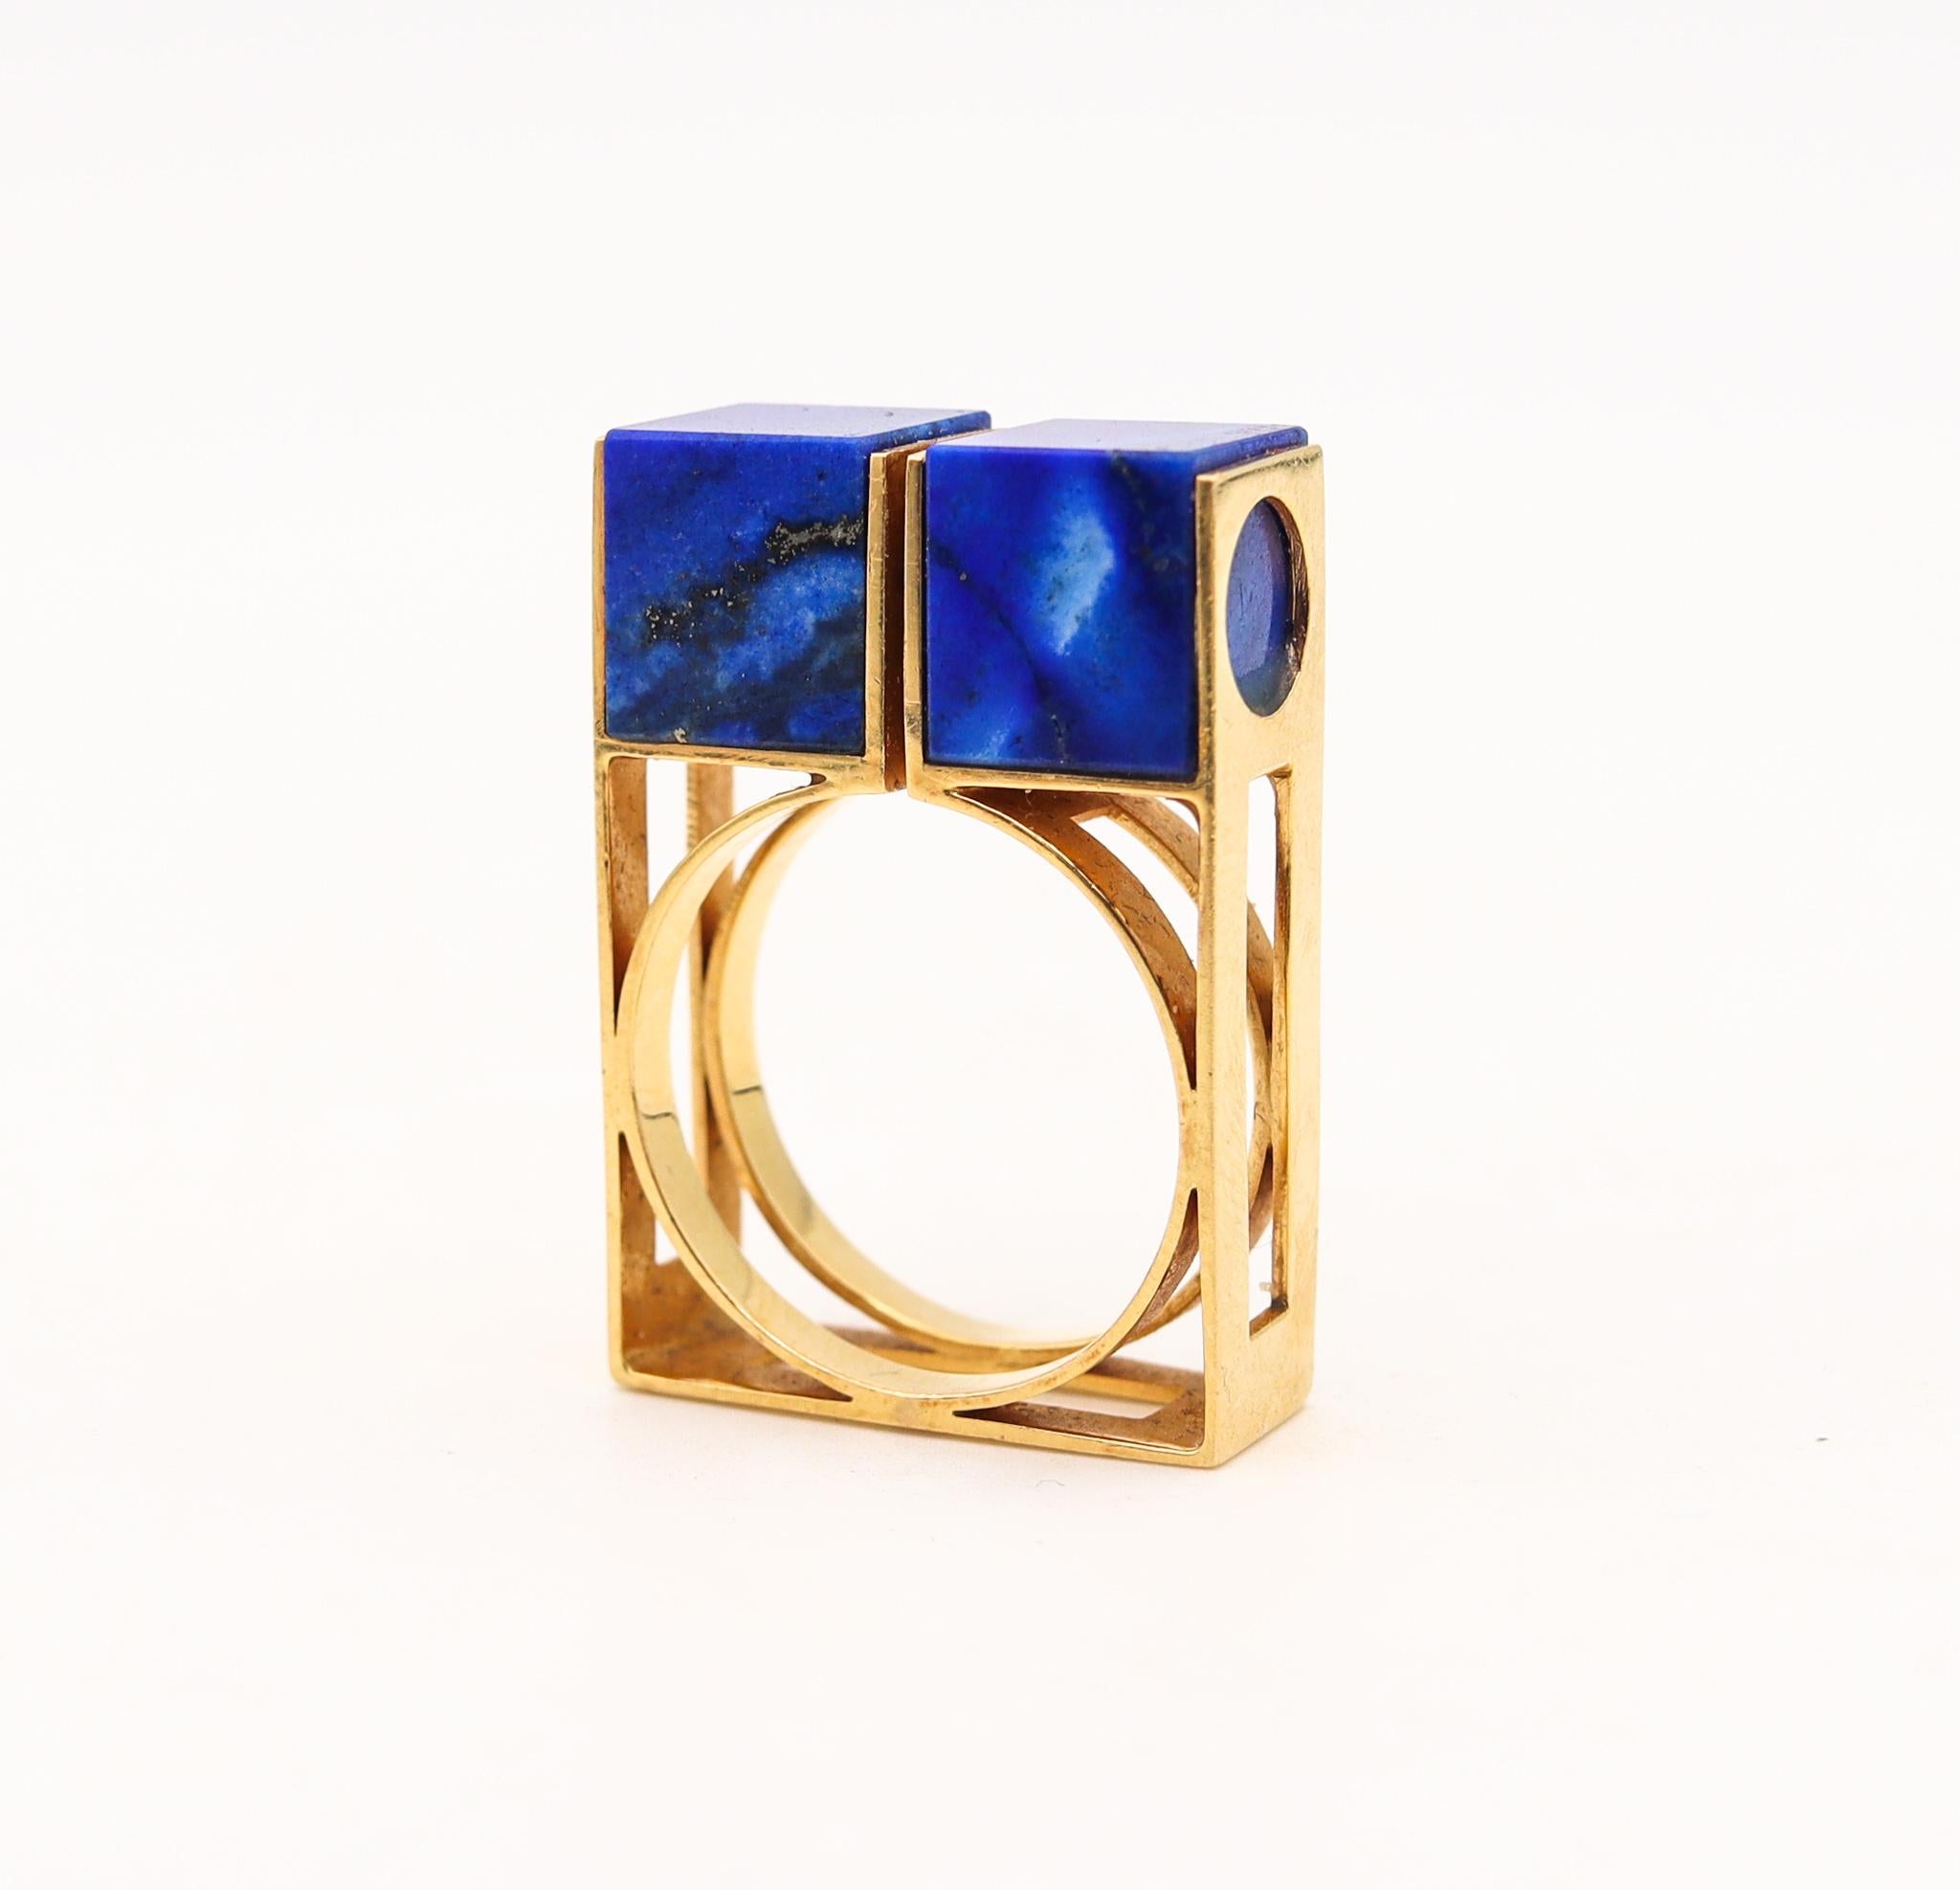 Modernist Octavio Sarda Palau 1970 Barcelona Geometric Ring in 18Kt Gold and Lapis Lazuli